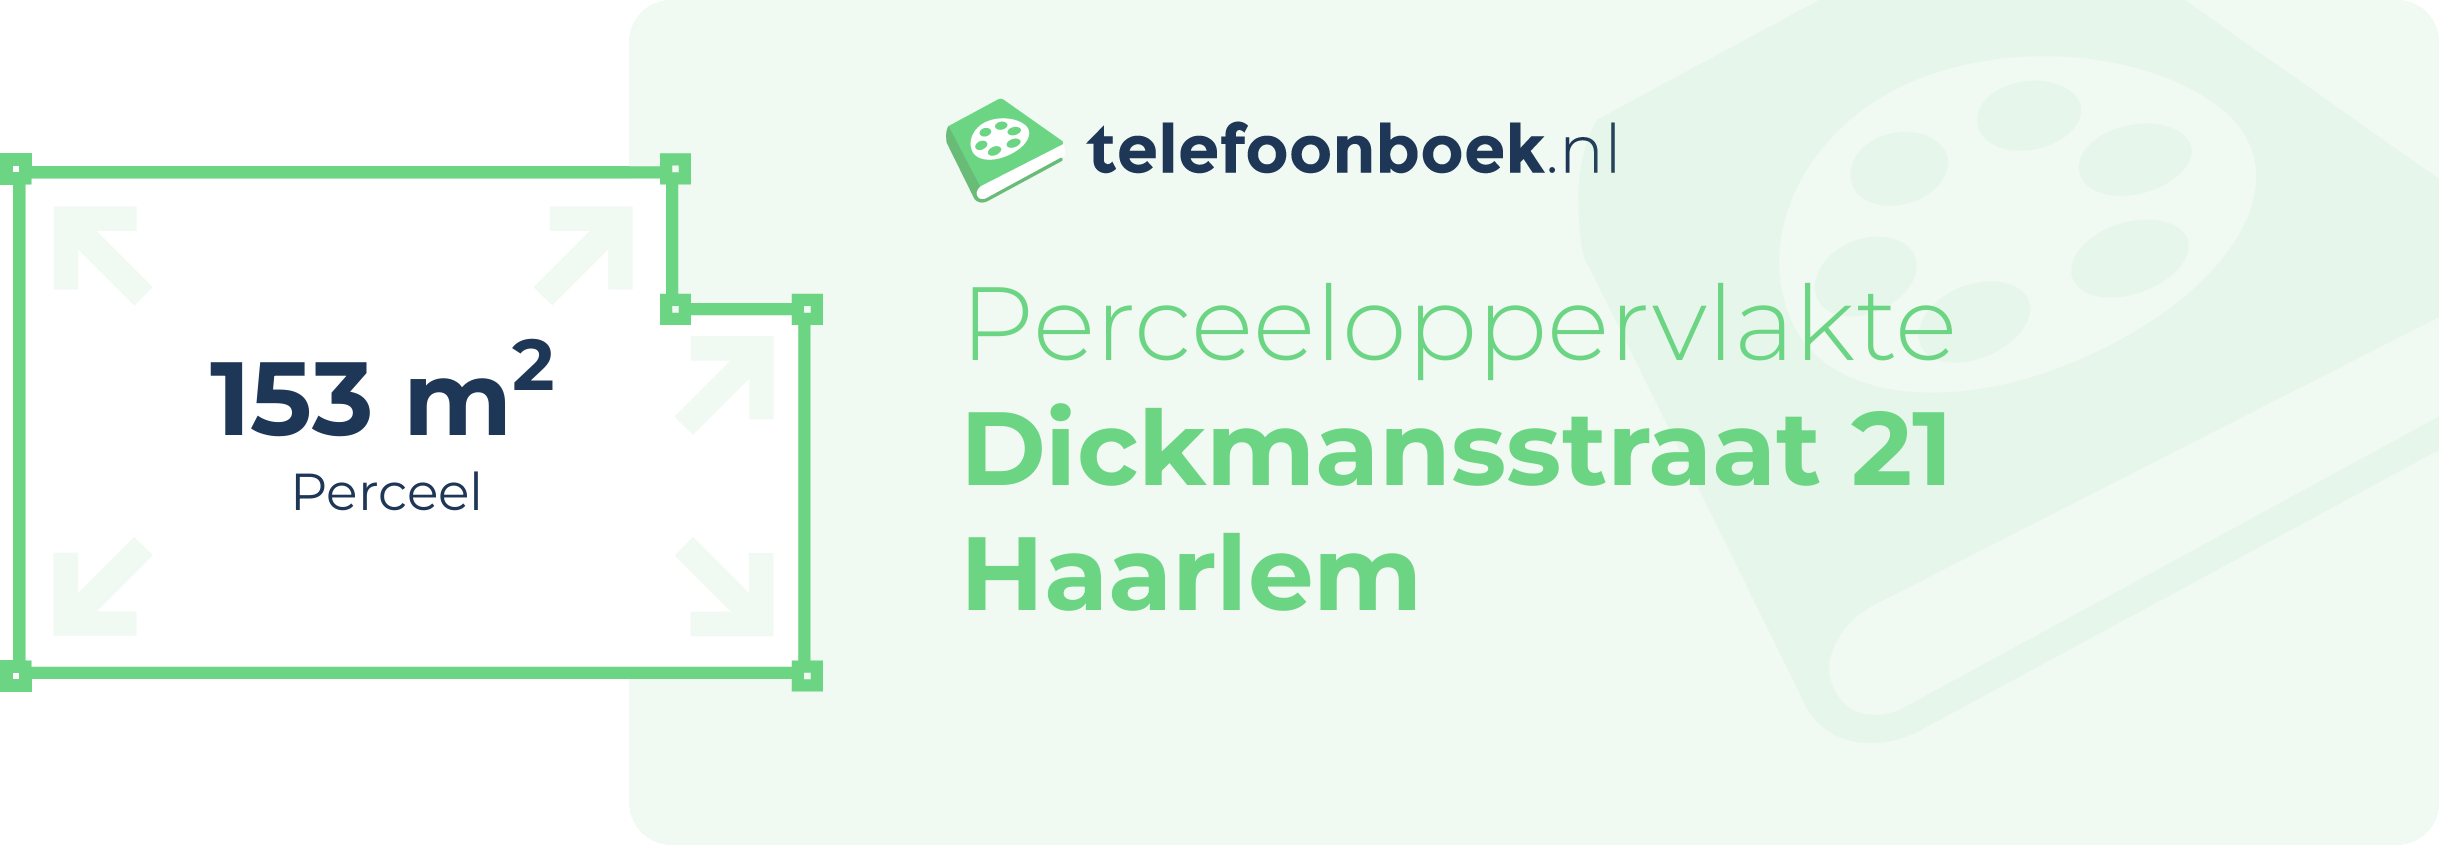 Perceeloppervlakte Dickmansstraat 21 Haarlem